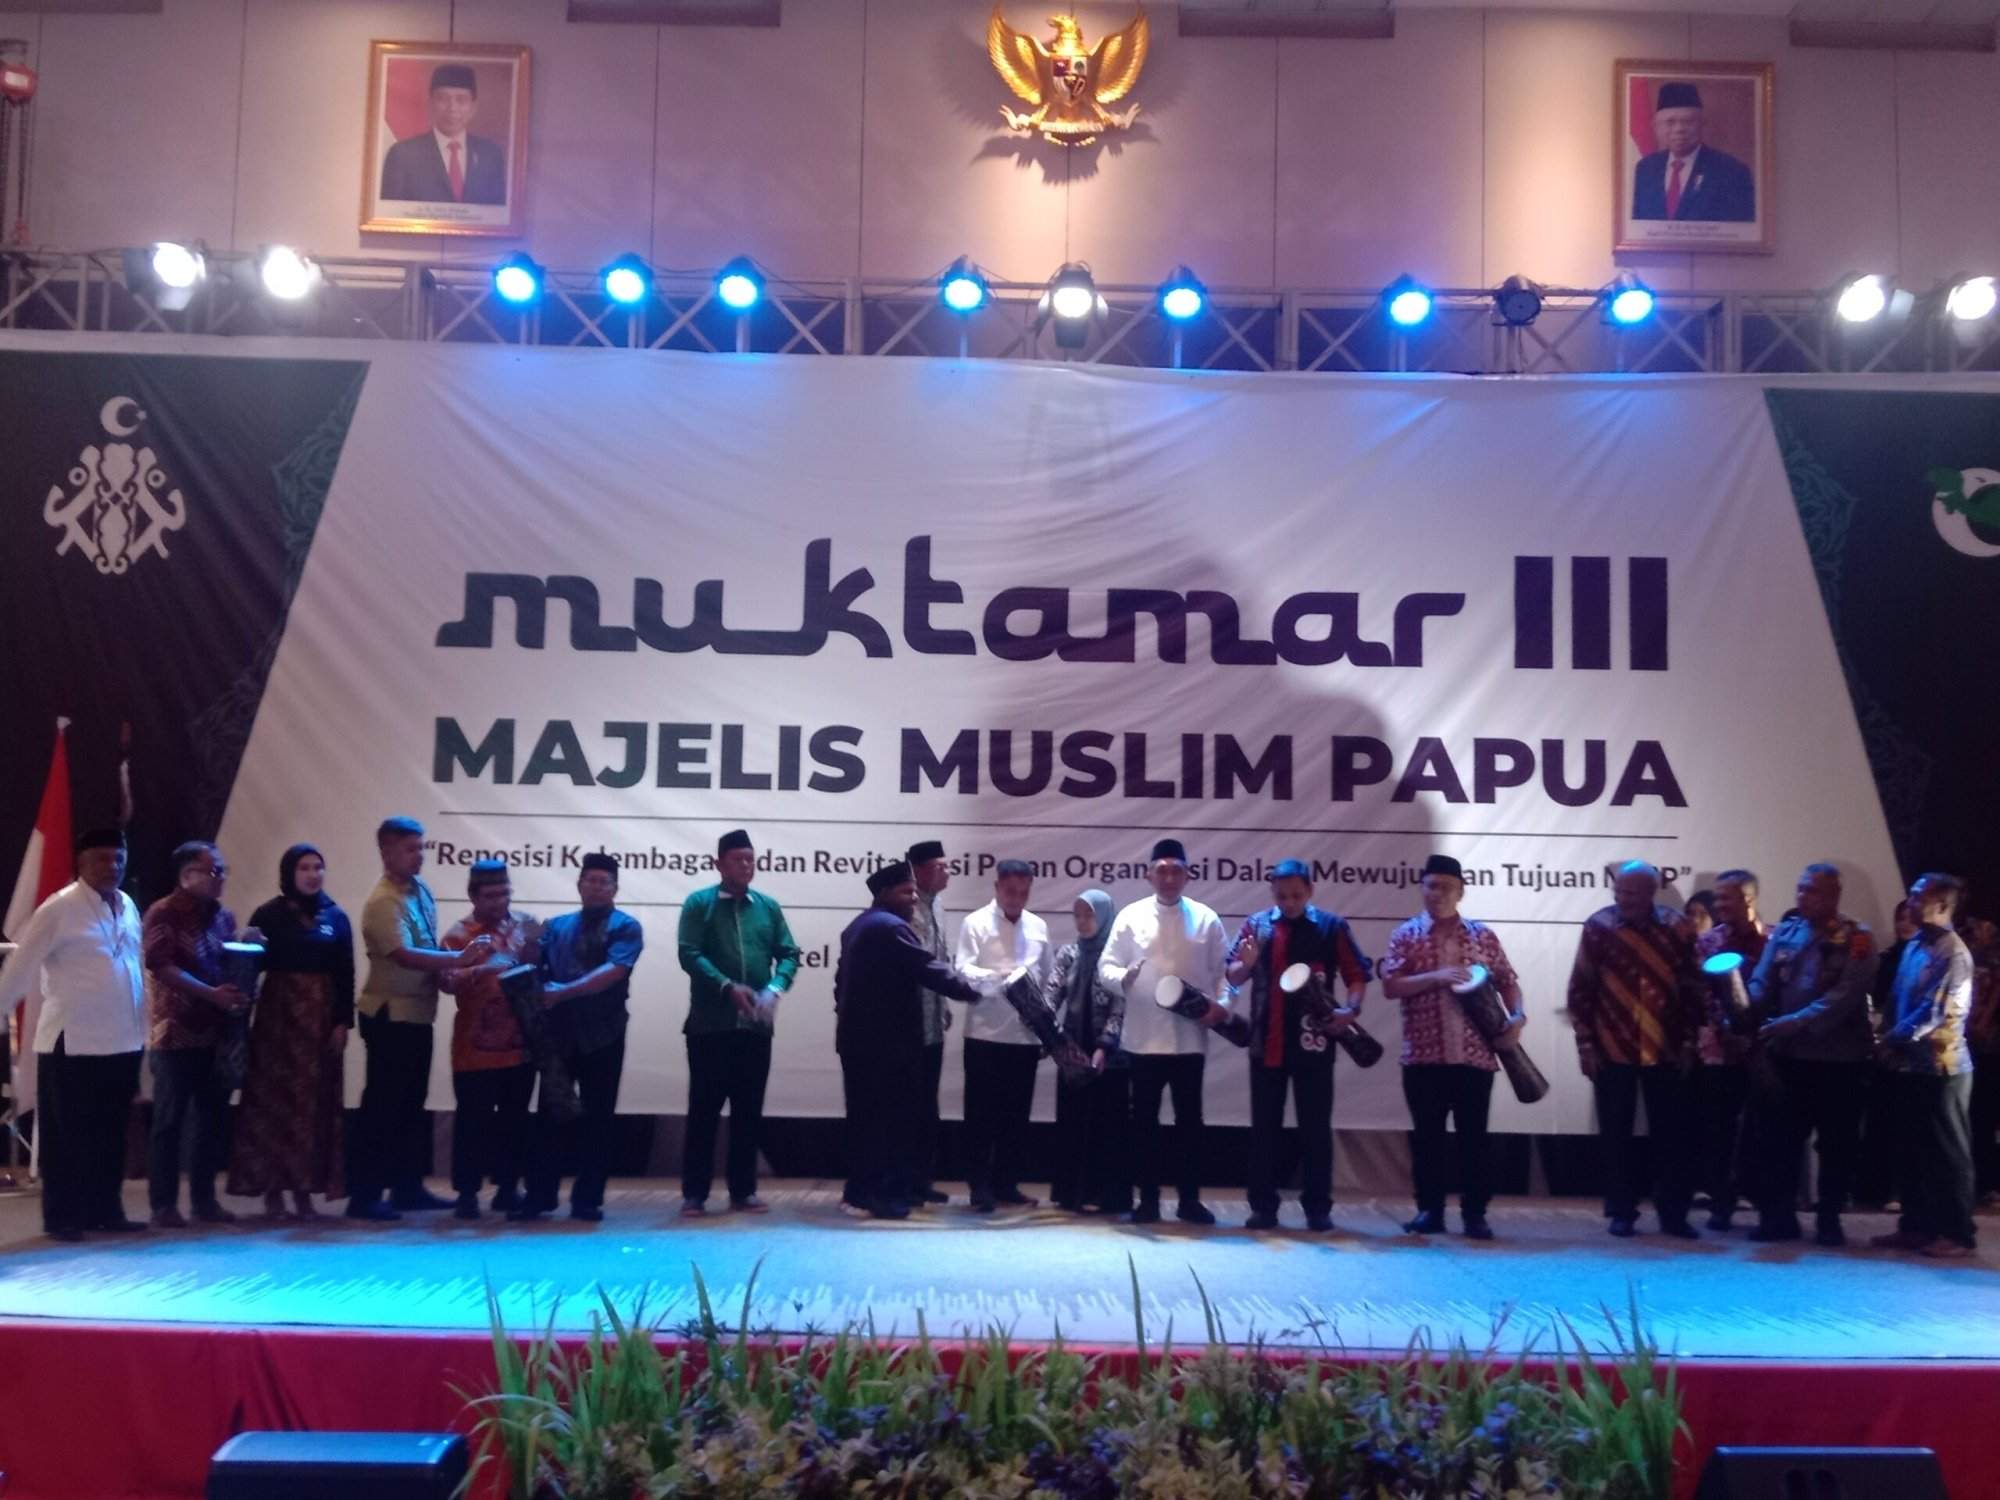 Majelis Muslim Papua